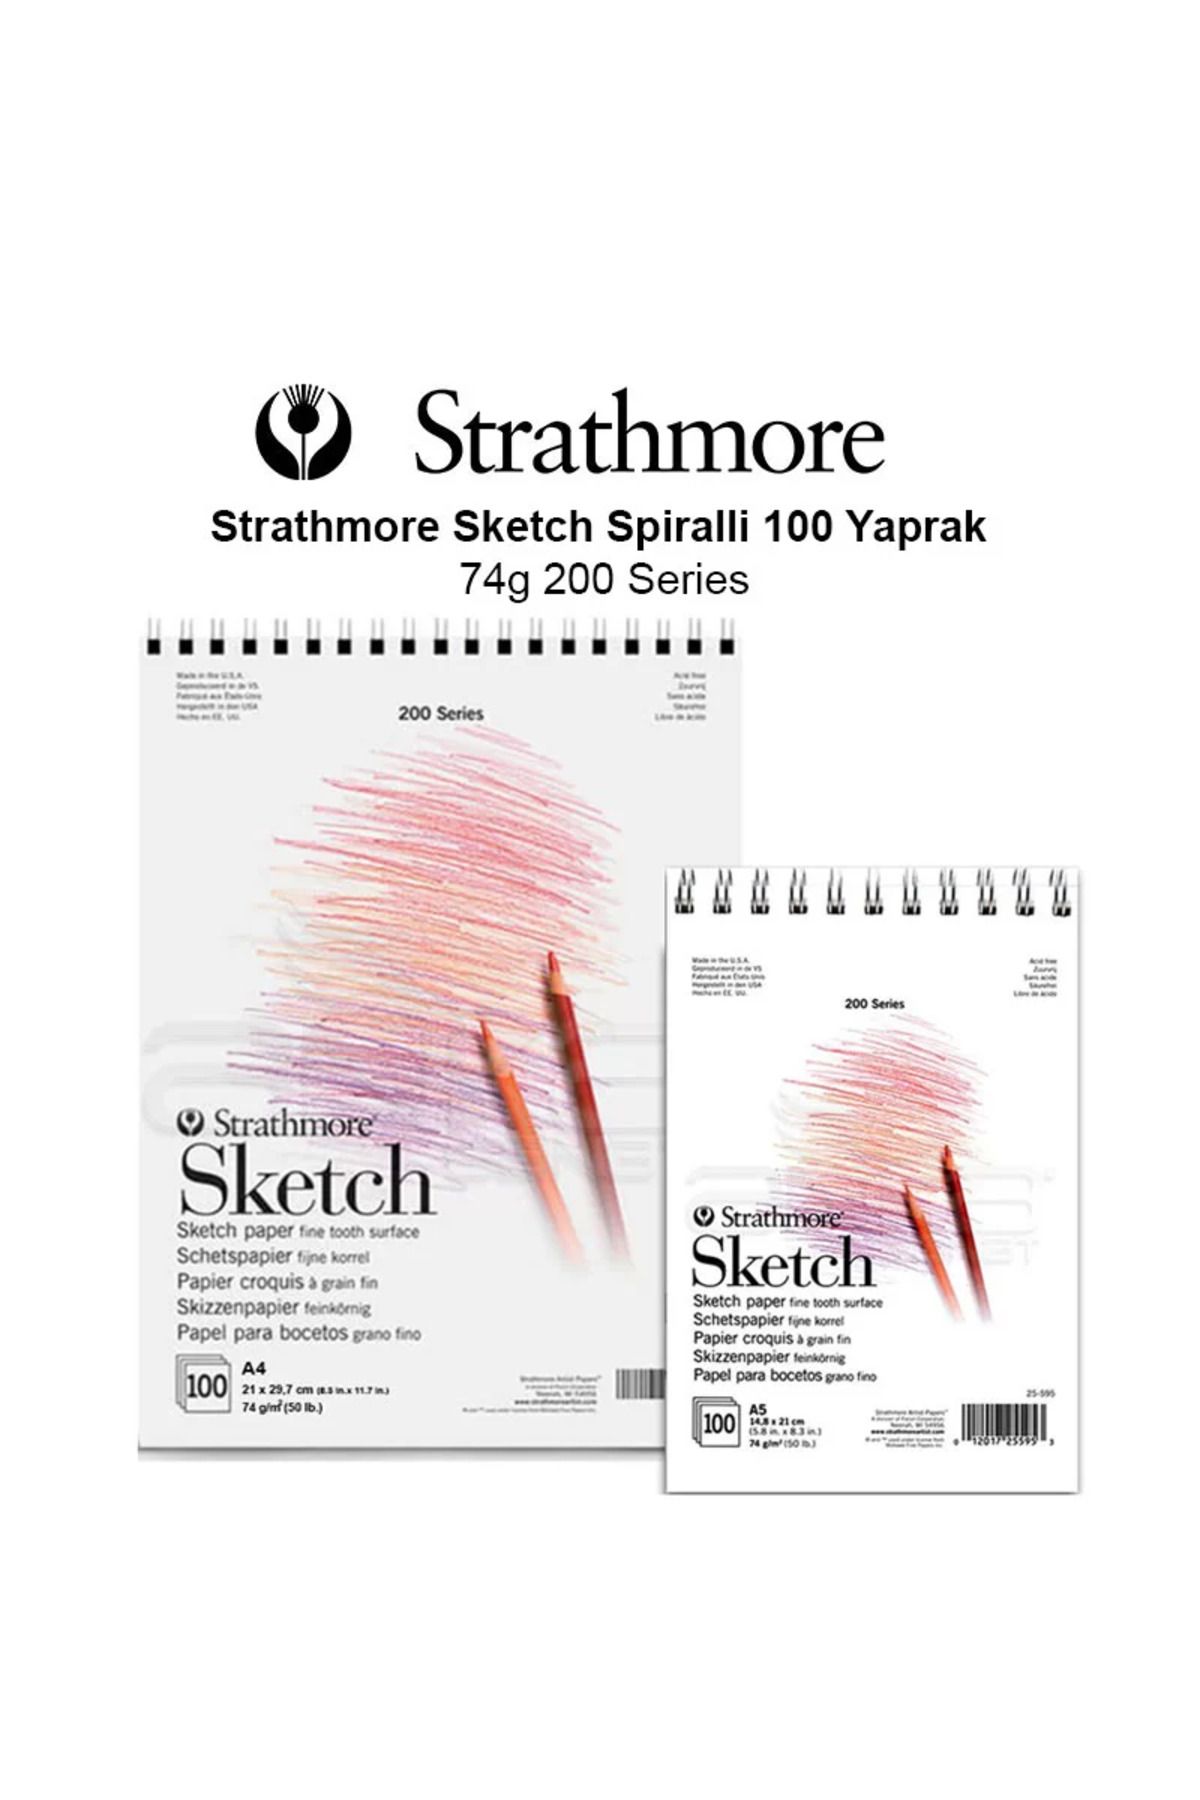 Strathmore Sketch Spiralli 100 Yaprak 74g 200 Series